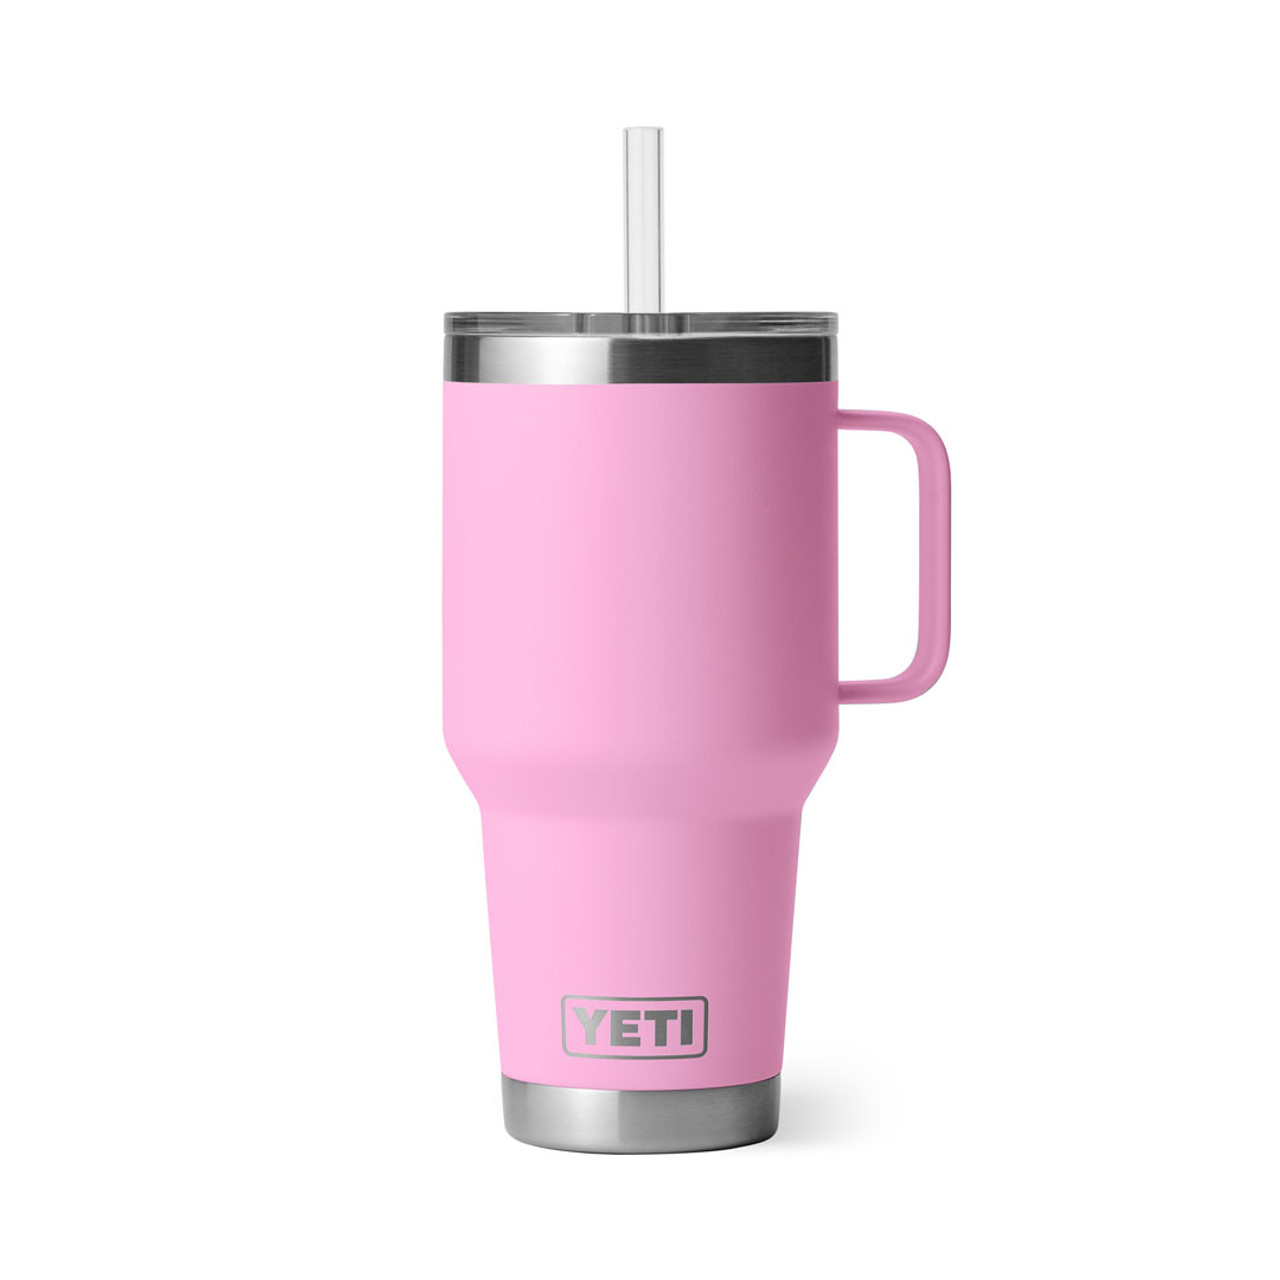 YETI Travel Mug with Handle & Straw Lid Comparison 35oz vs 25oz